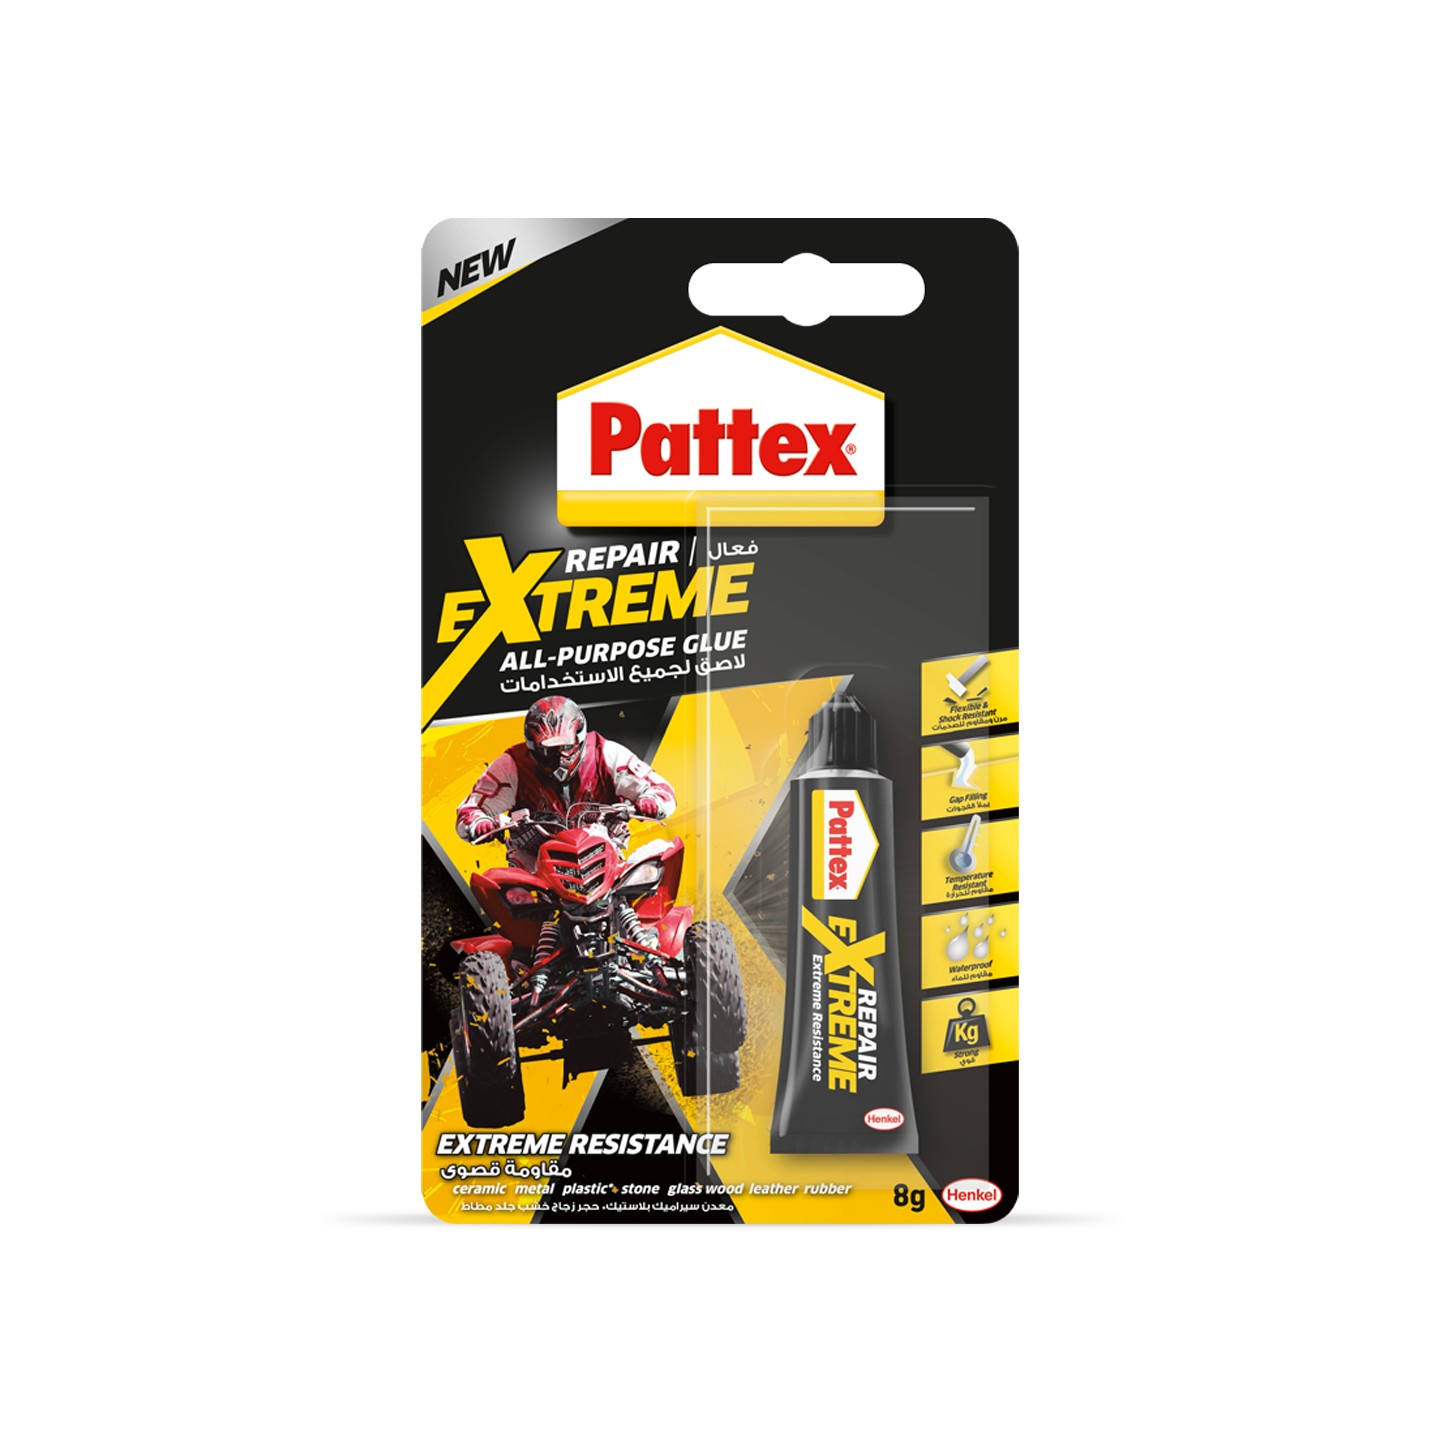 Pattex Repair Extreme colle tout usage (8 grammes) Pattex